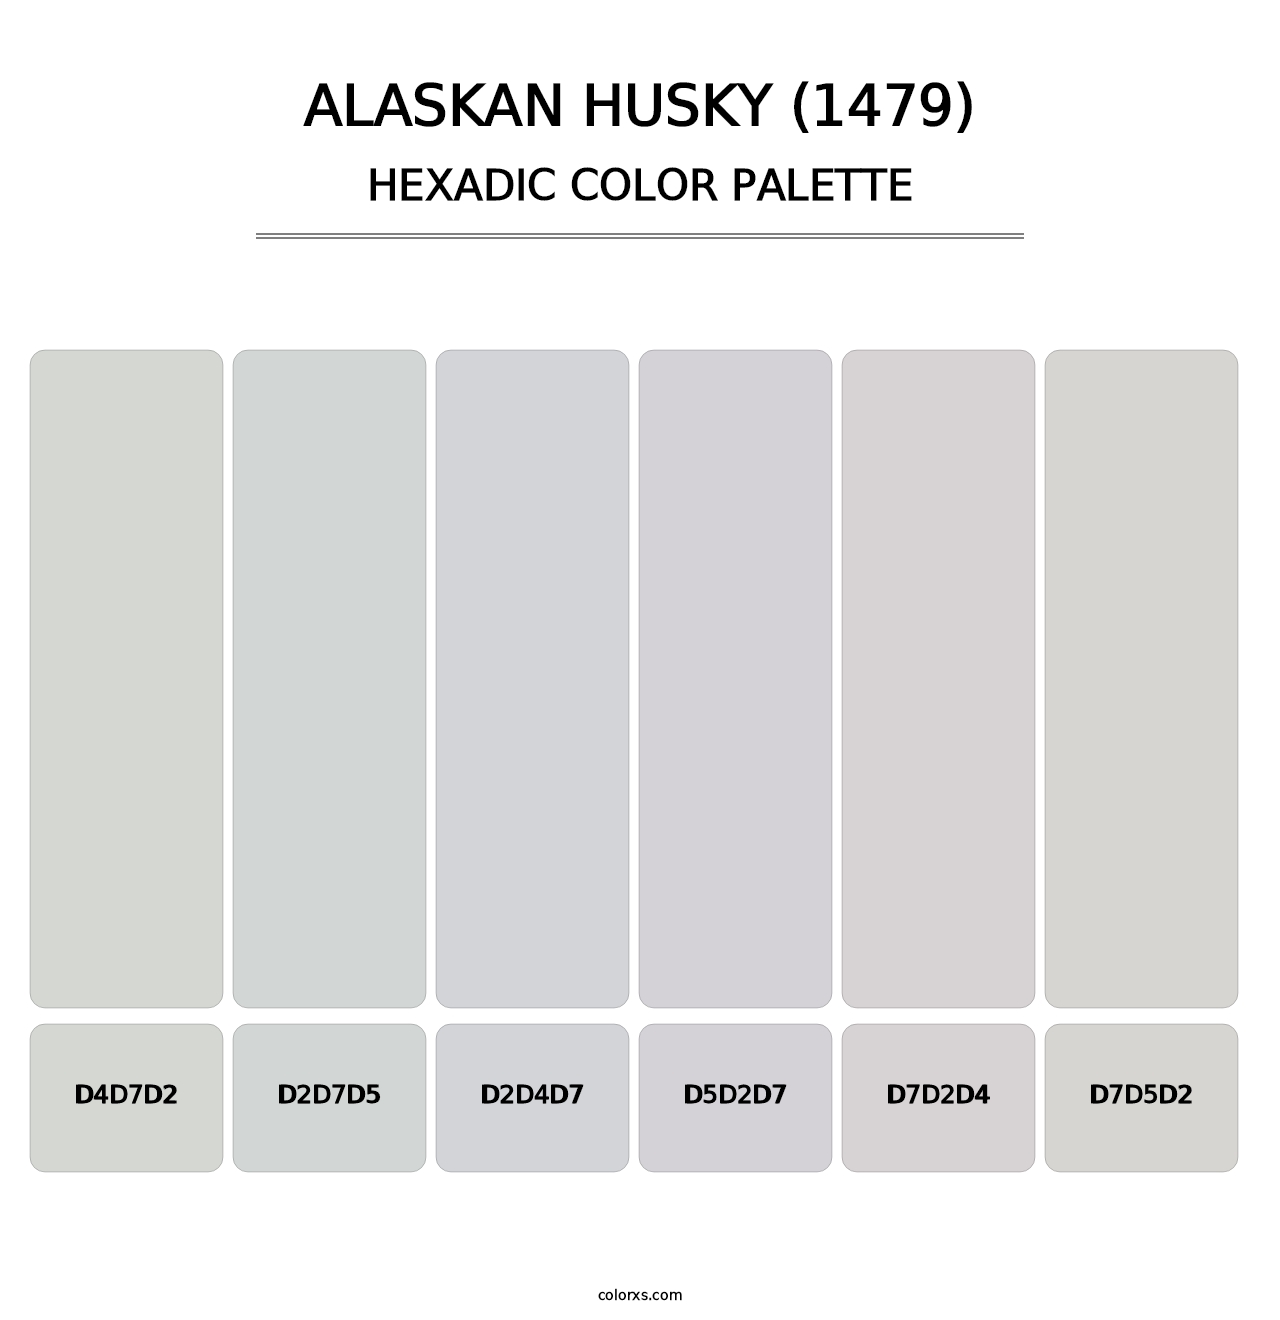 Alaskan Husky (1479) - Hexadic Color Palette